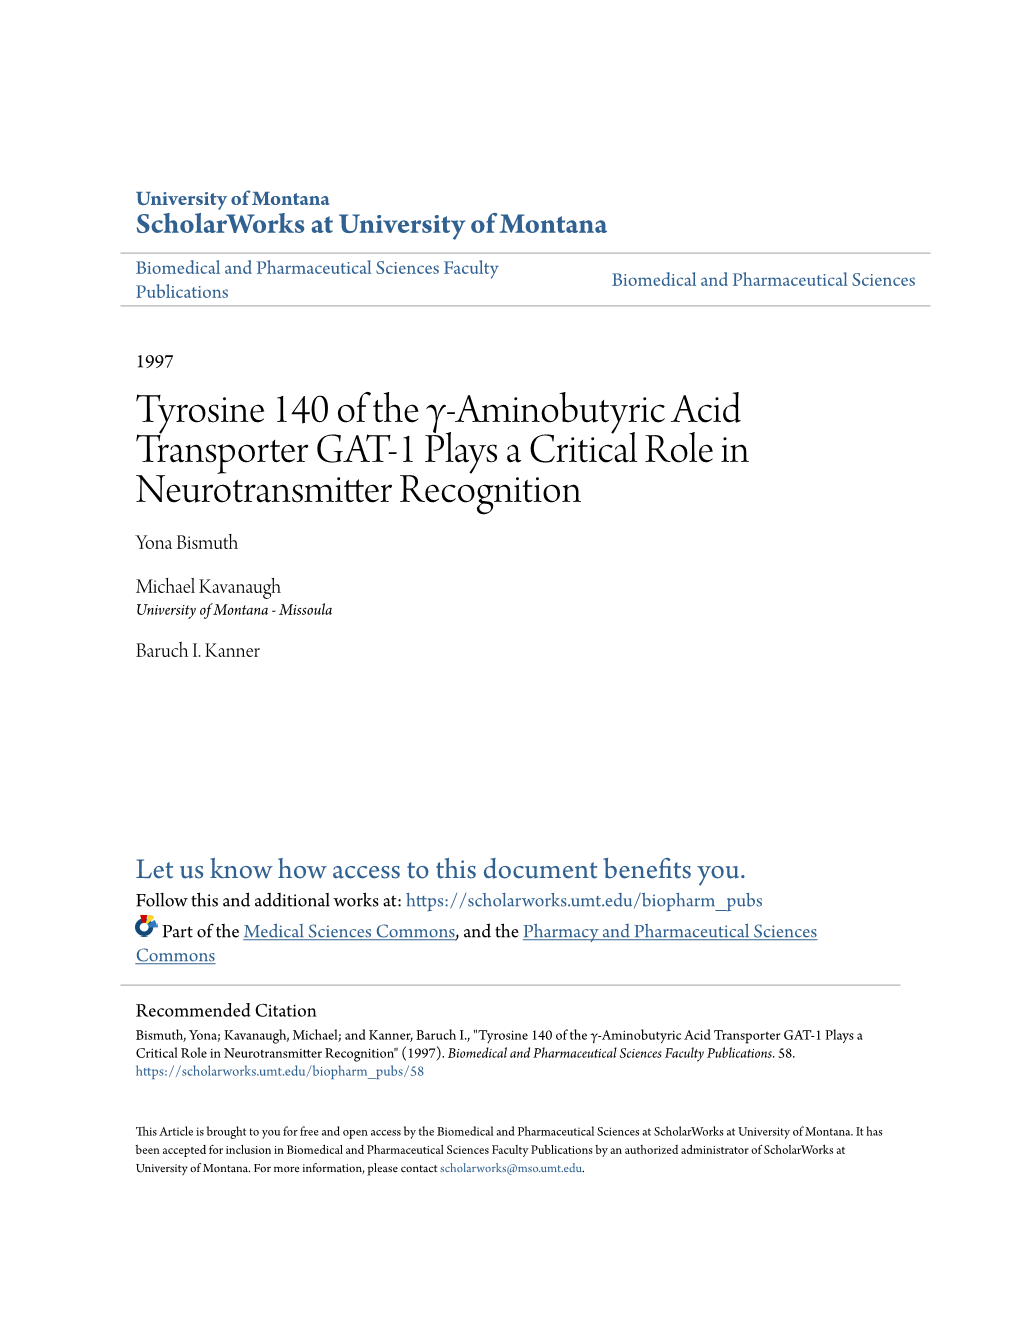 Tyrosine 140 of the Î³-Aminobutyric Acid Transporter GAT-1 Plays A